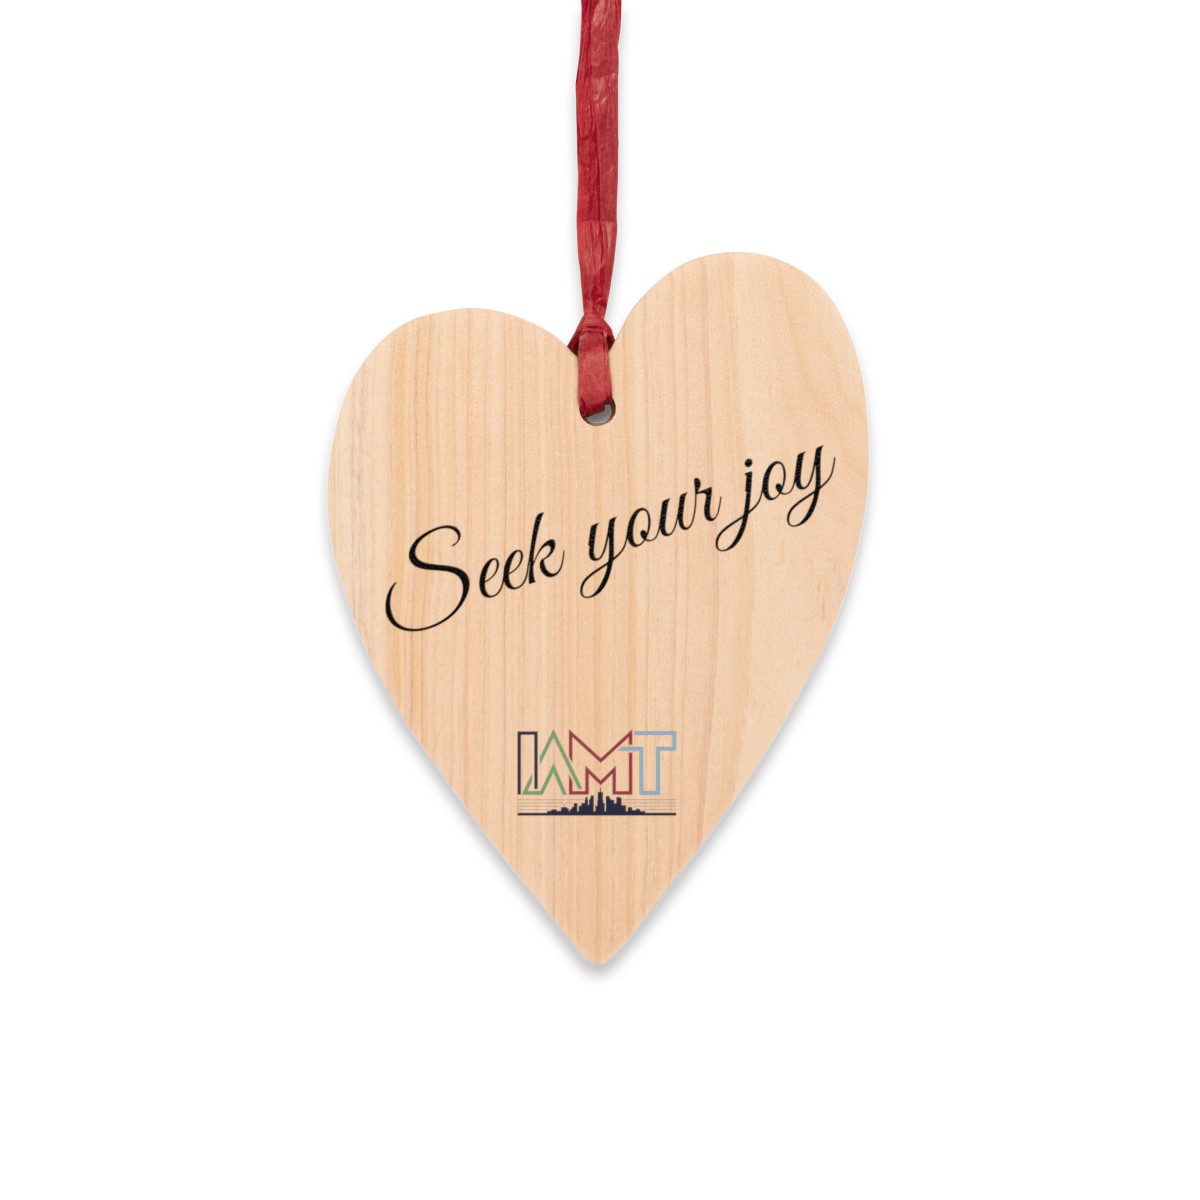 Seek your Joy Wooden Ornament/Magnet product thumbnail image